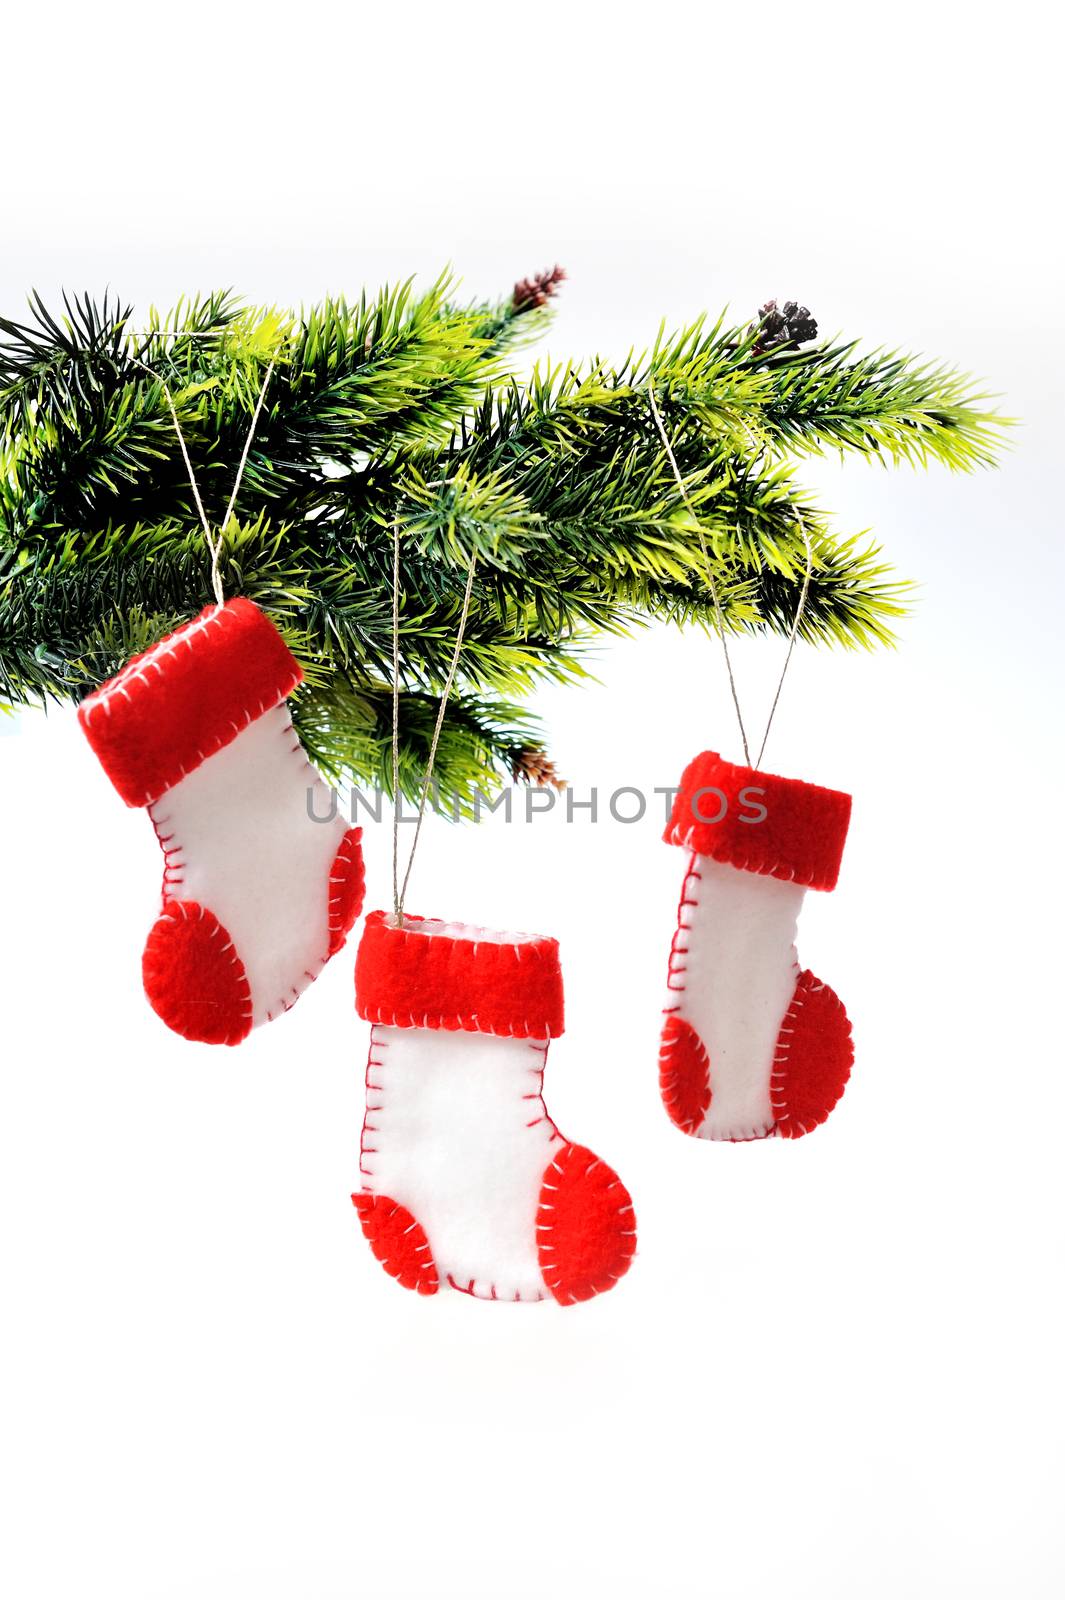 Three Santa's boots on christmas tree